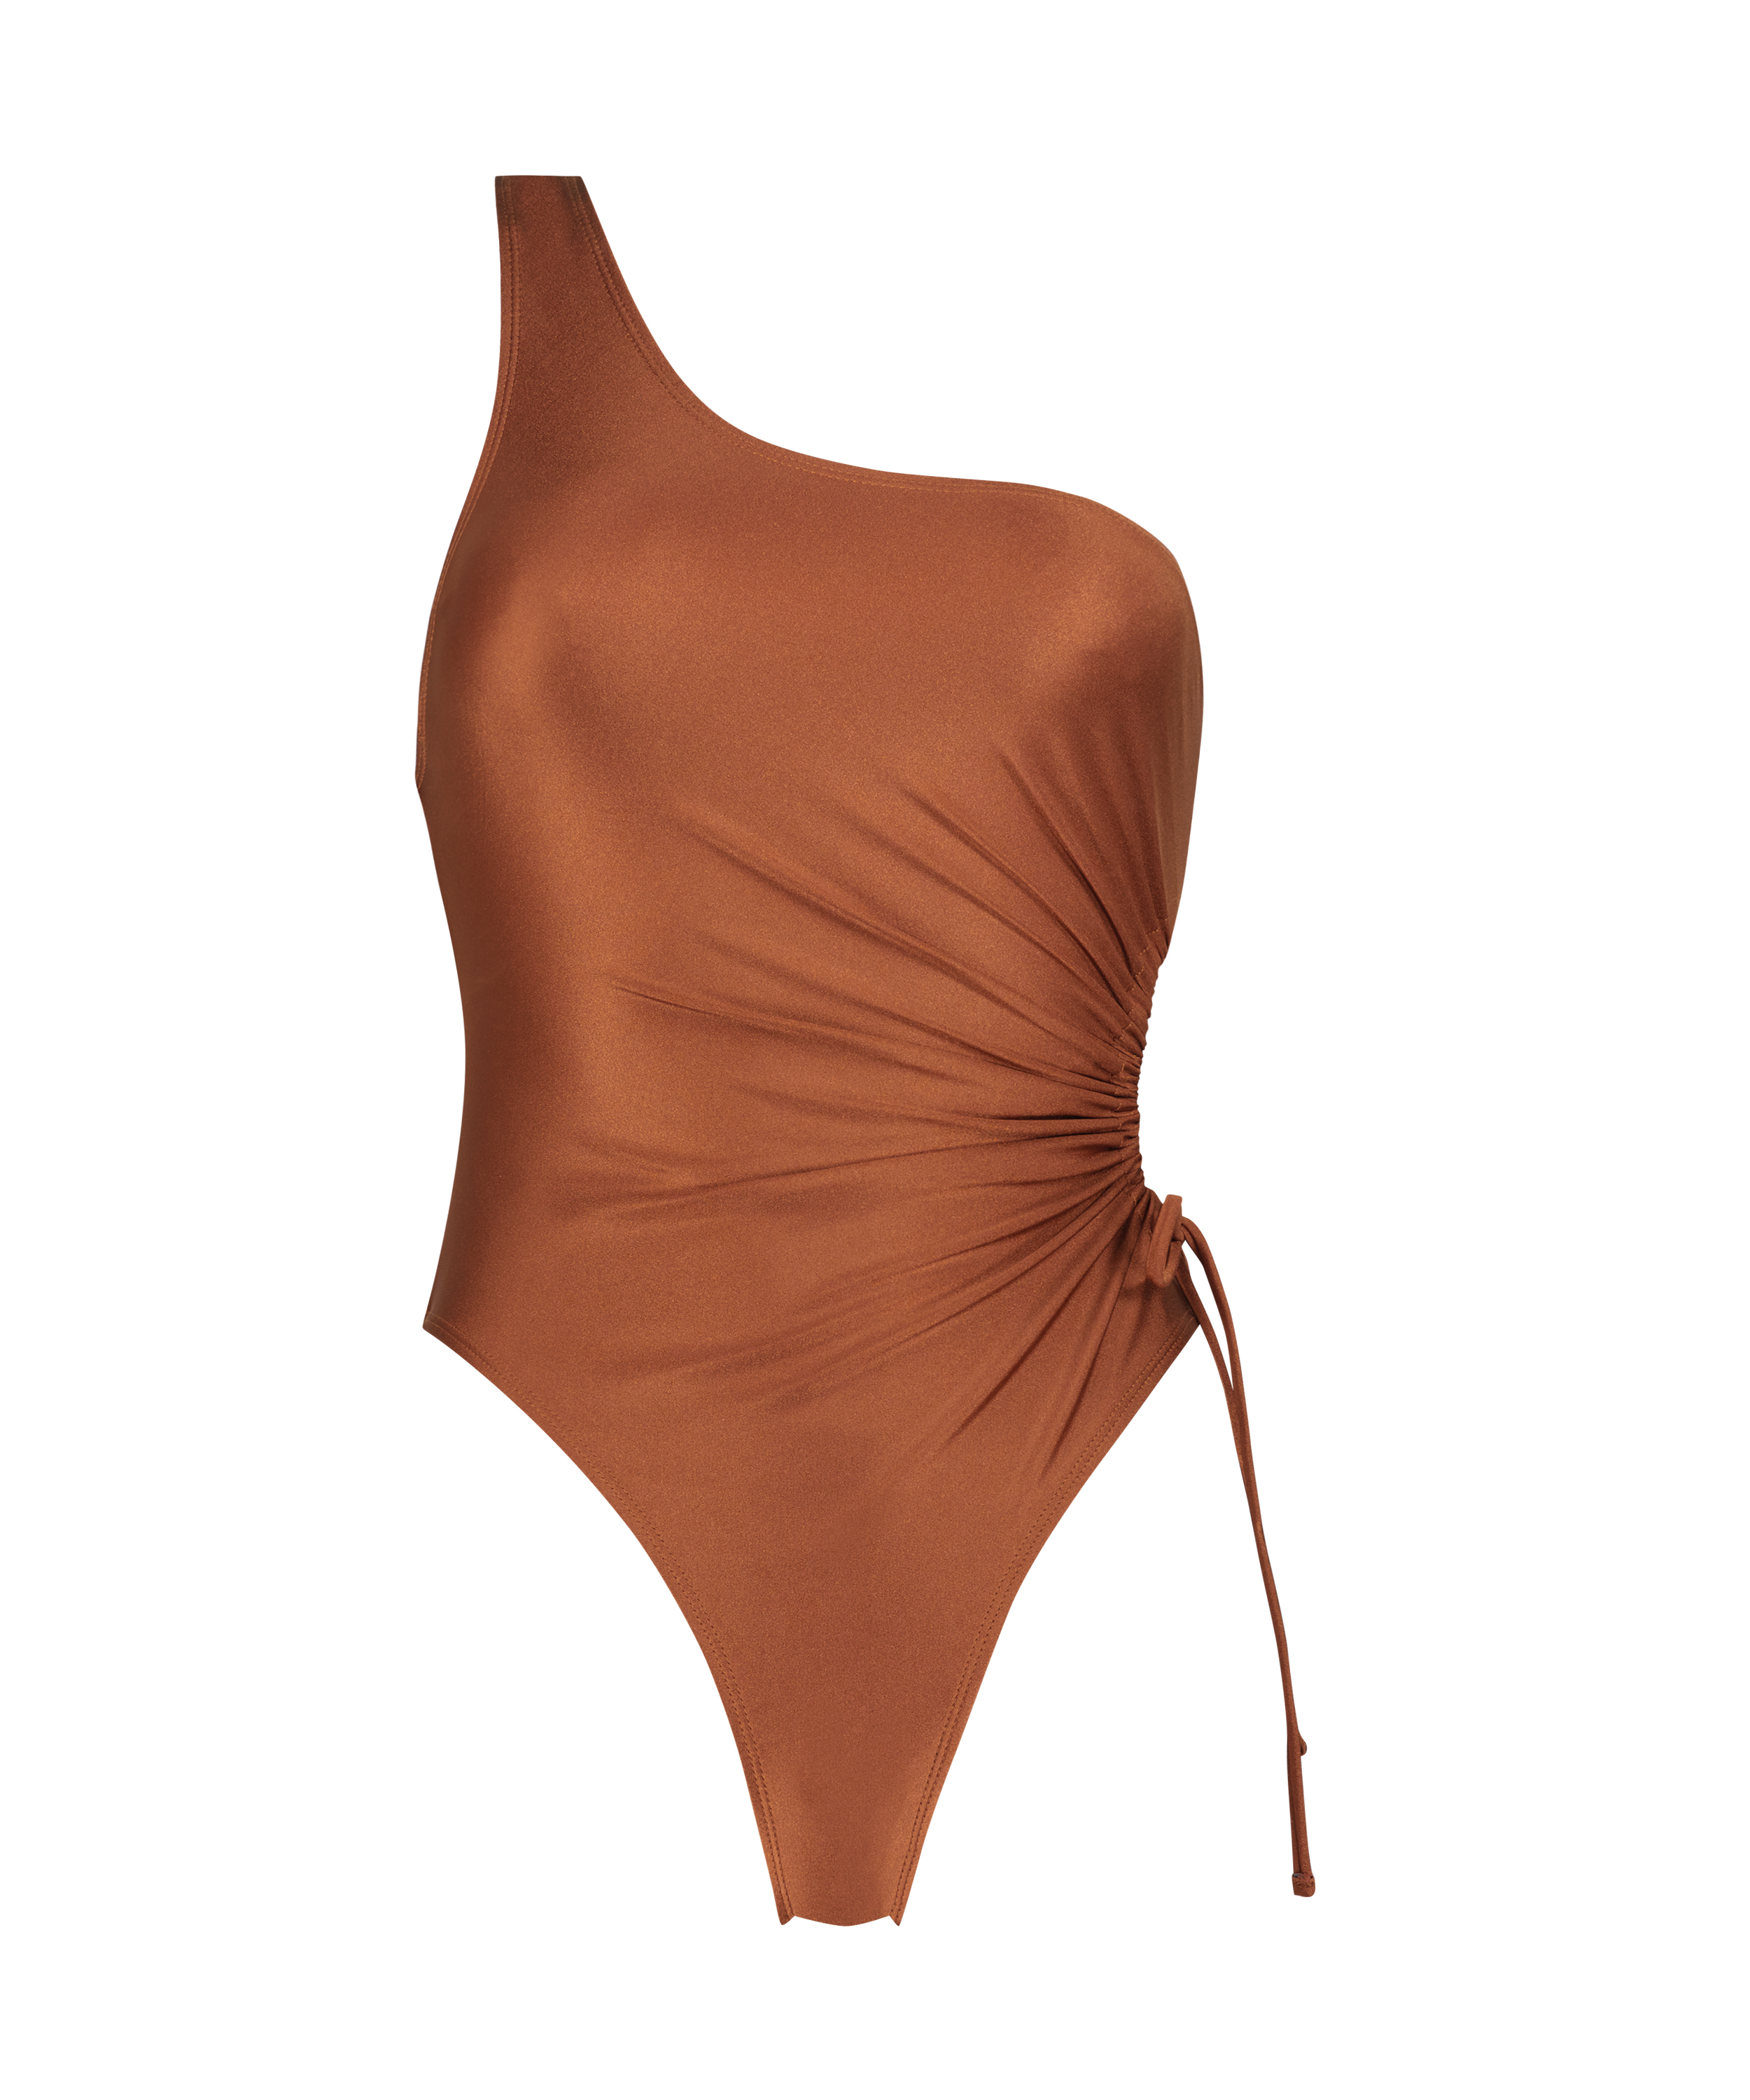 Sahara Swimsuit, Brown, main